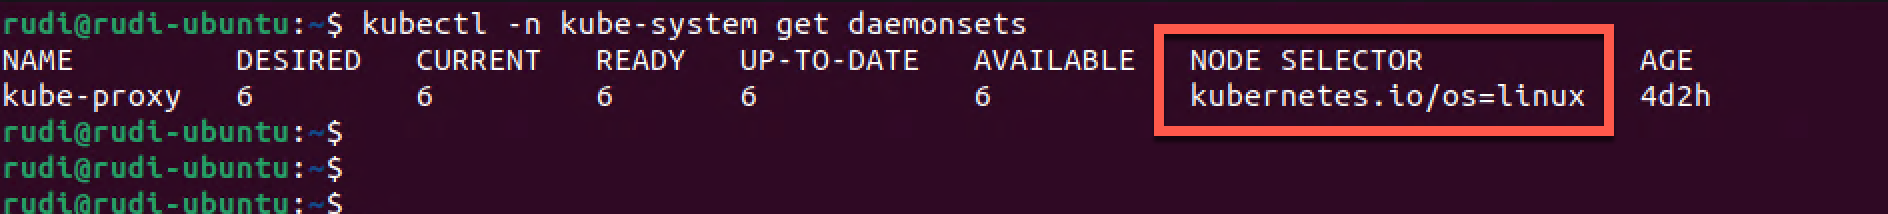 Daemon set in kube-system namespace